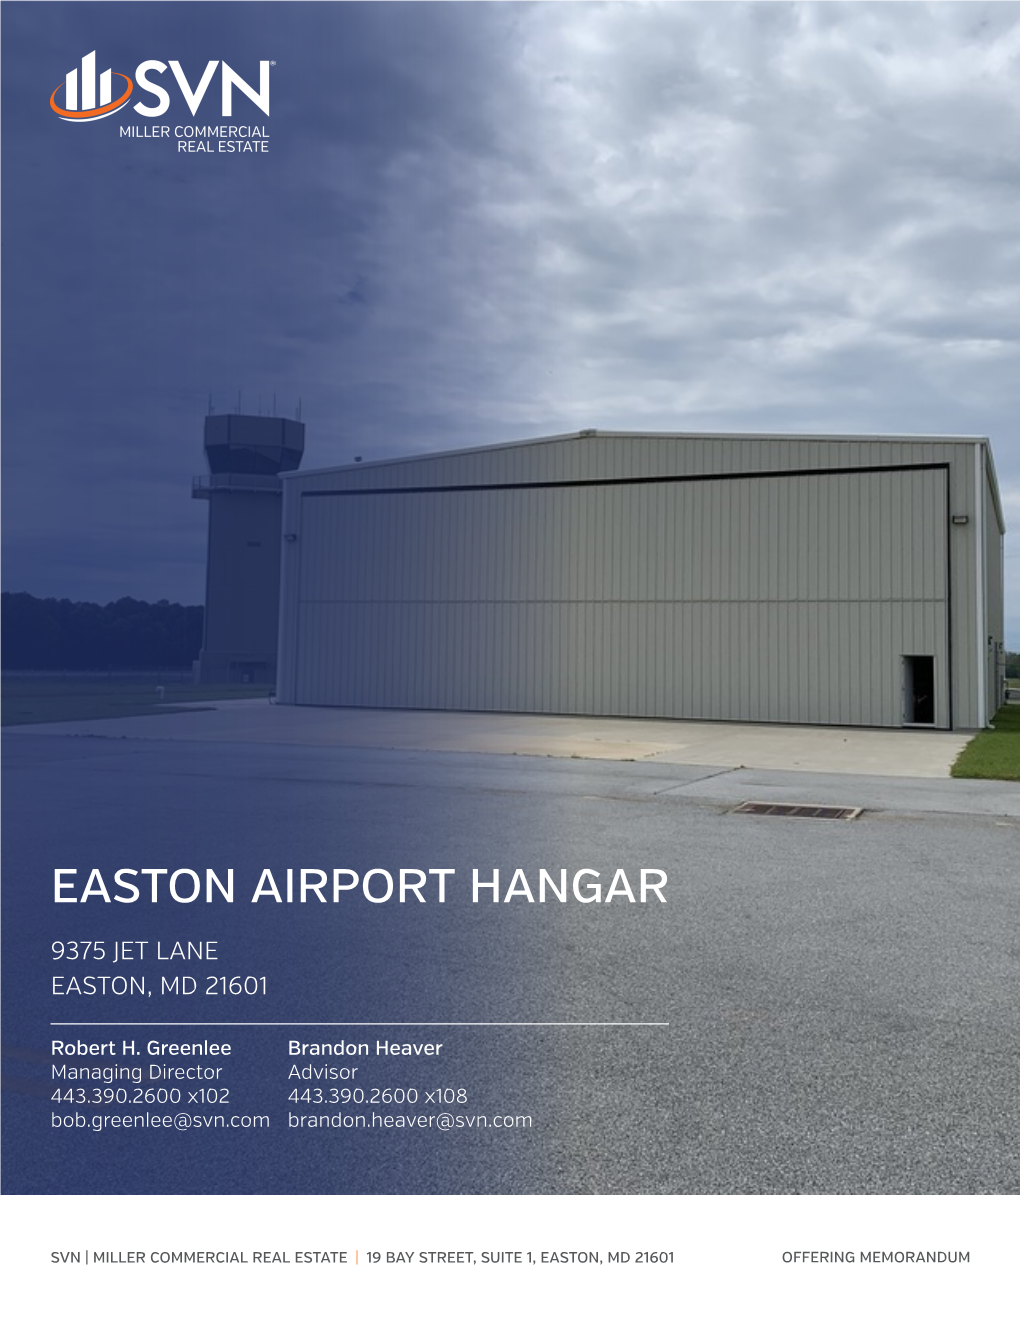 Easton Airport Hangar